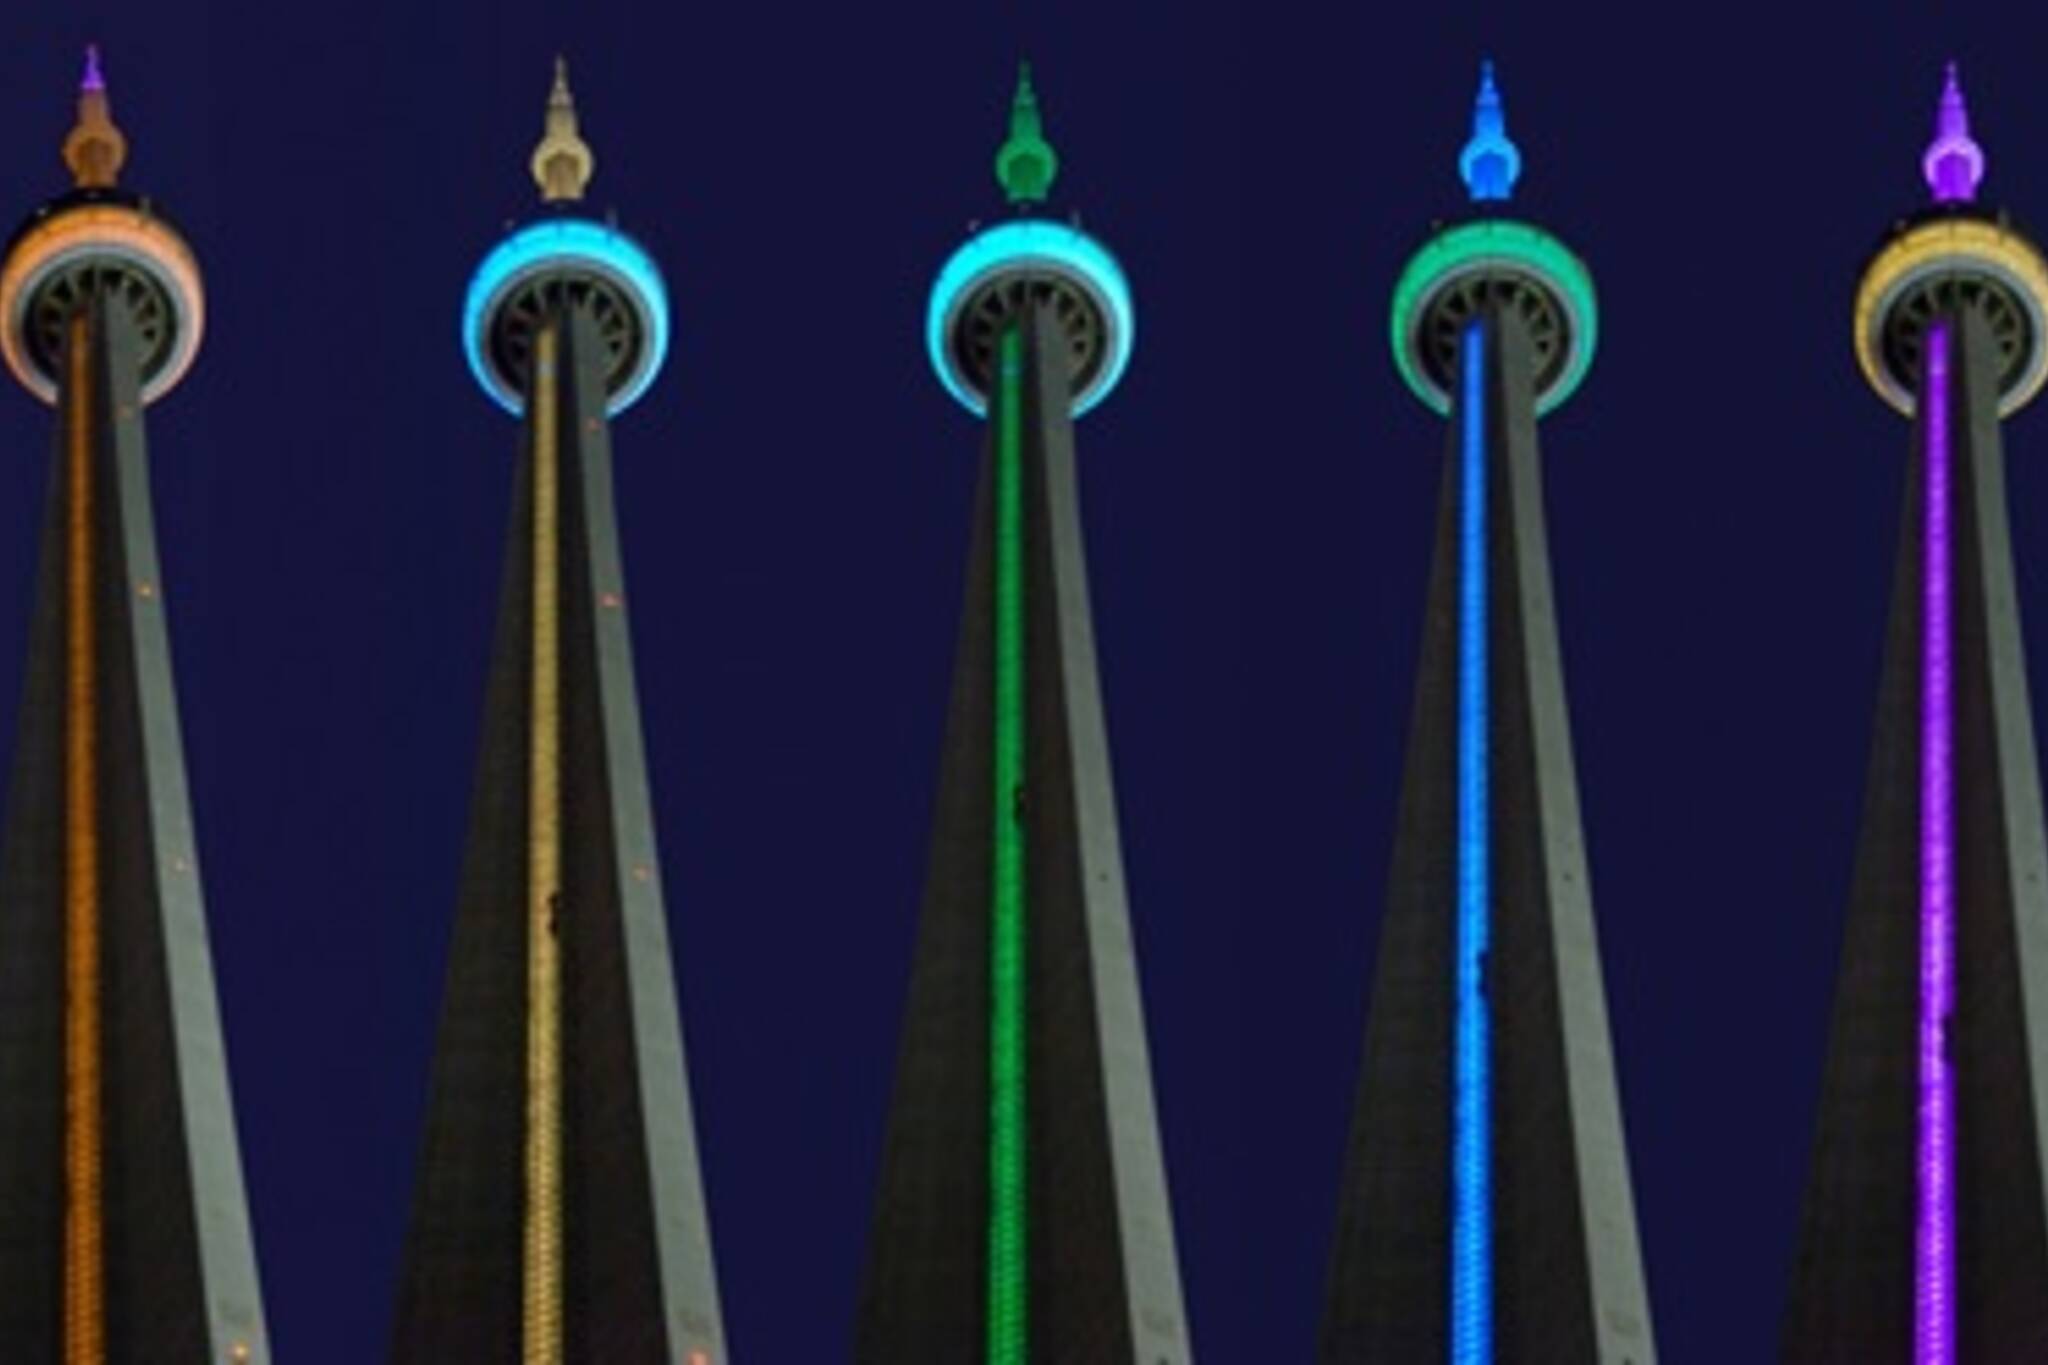 20090628-CN Tower Rainbow Sequence.jpg